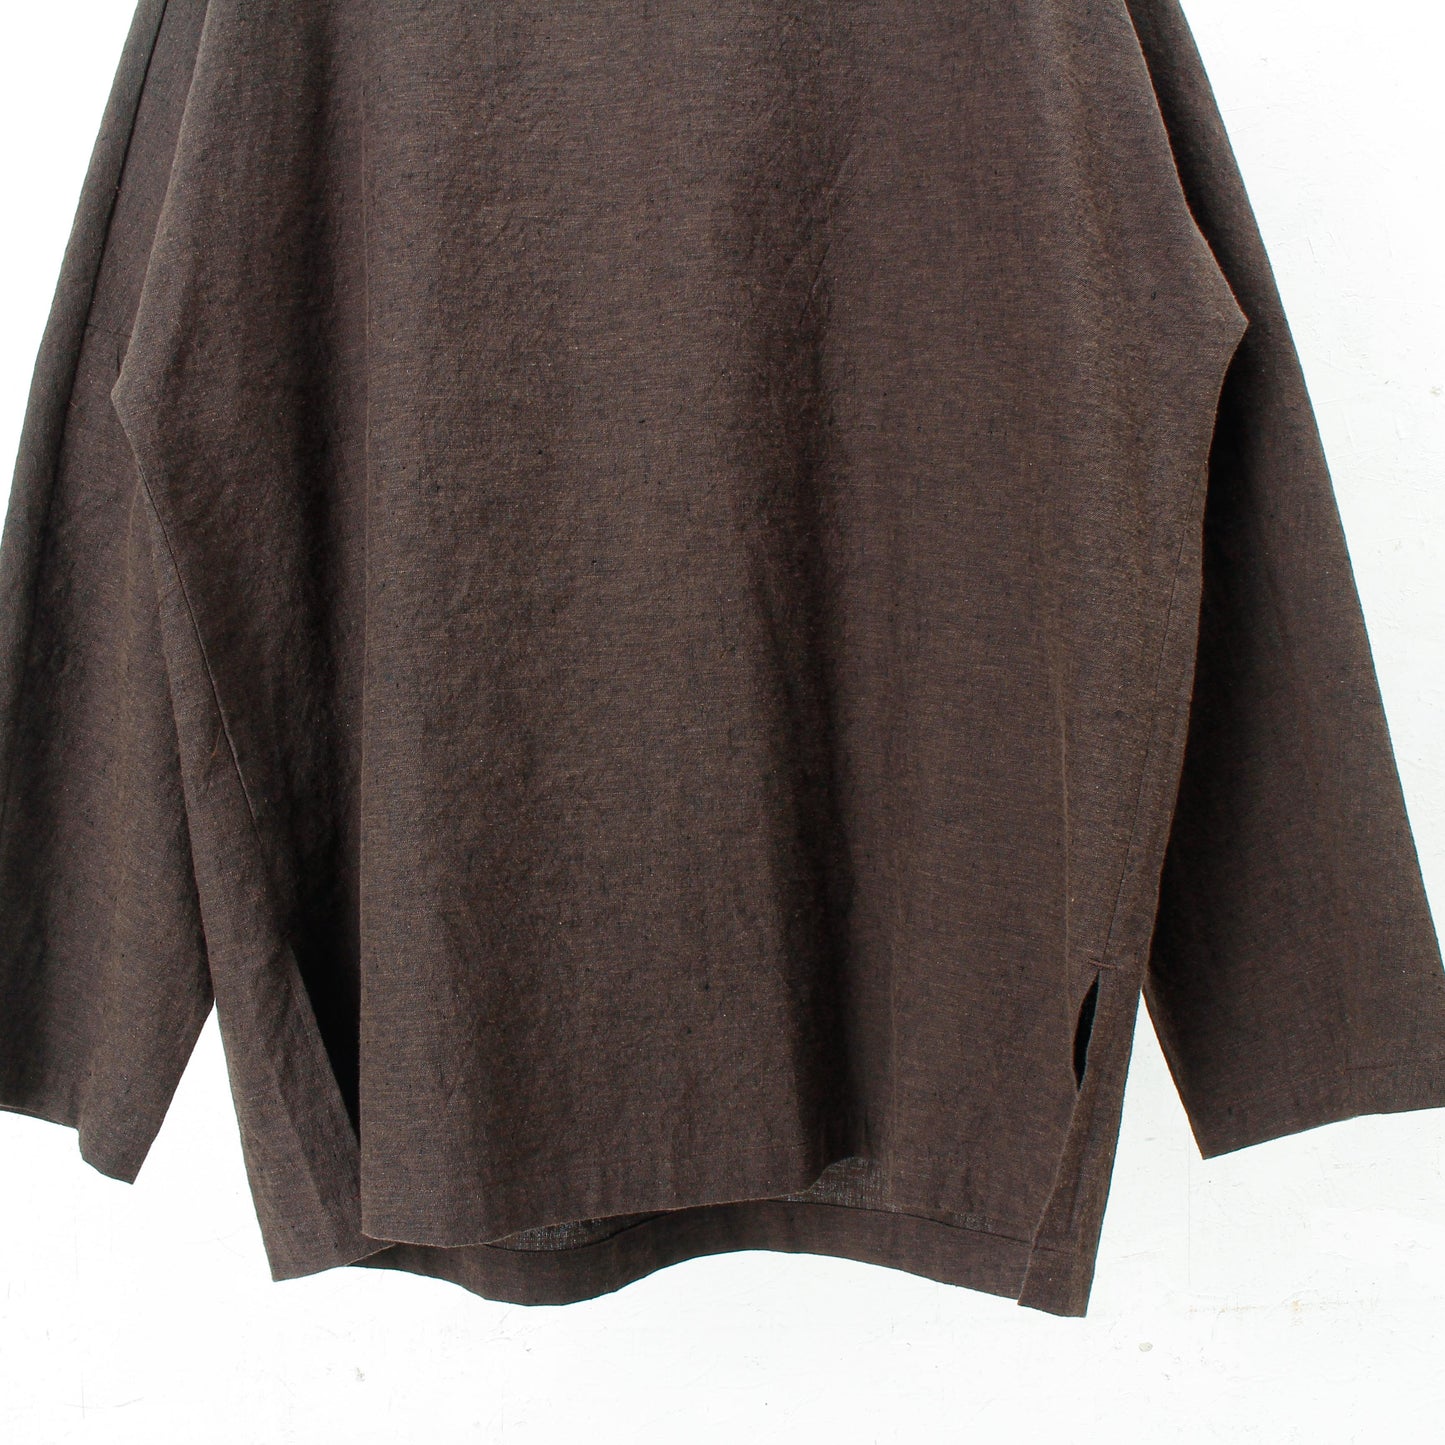 Linen cotton pullover / brown